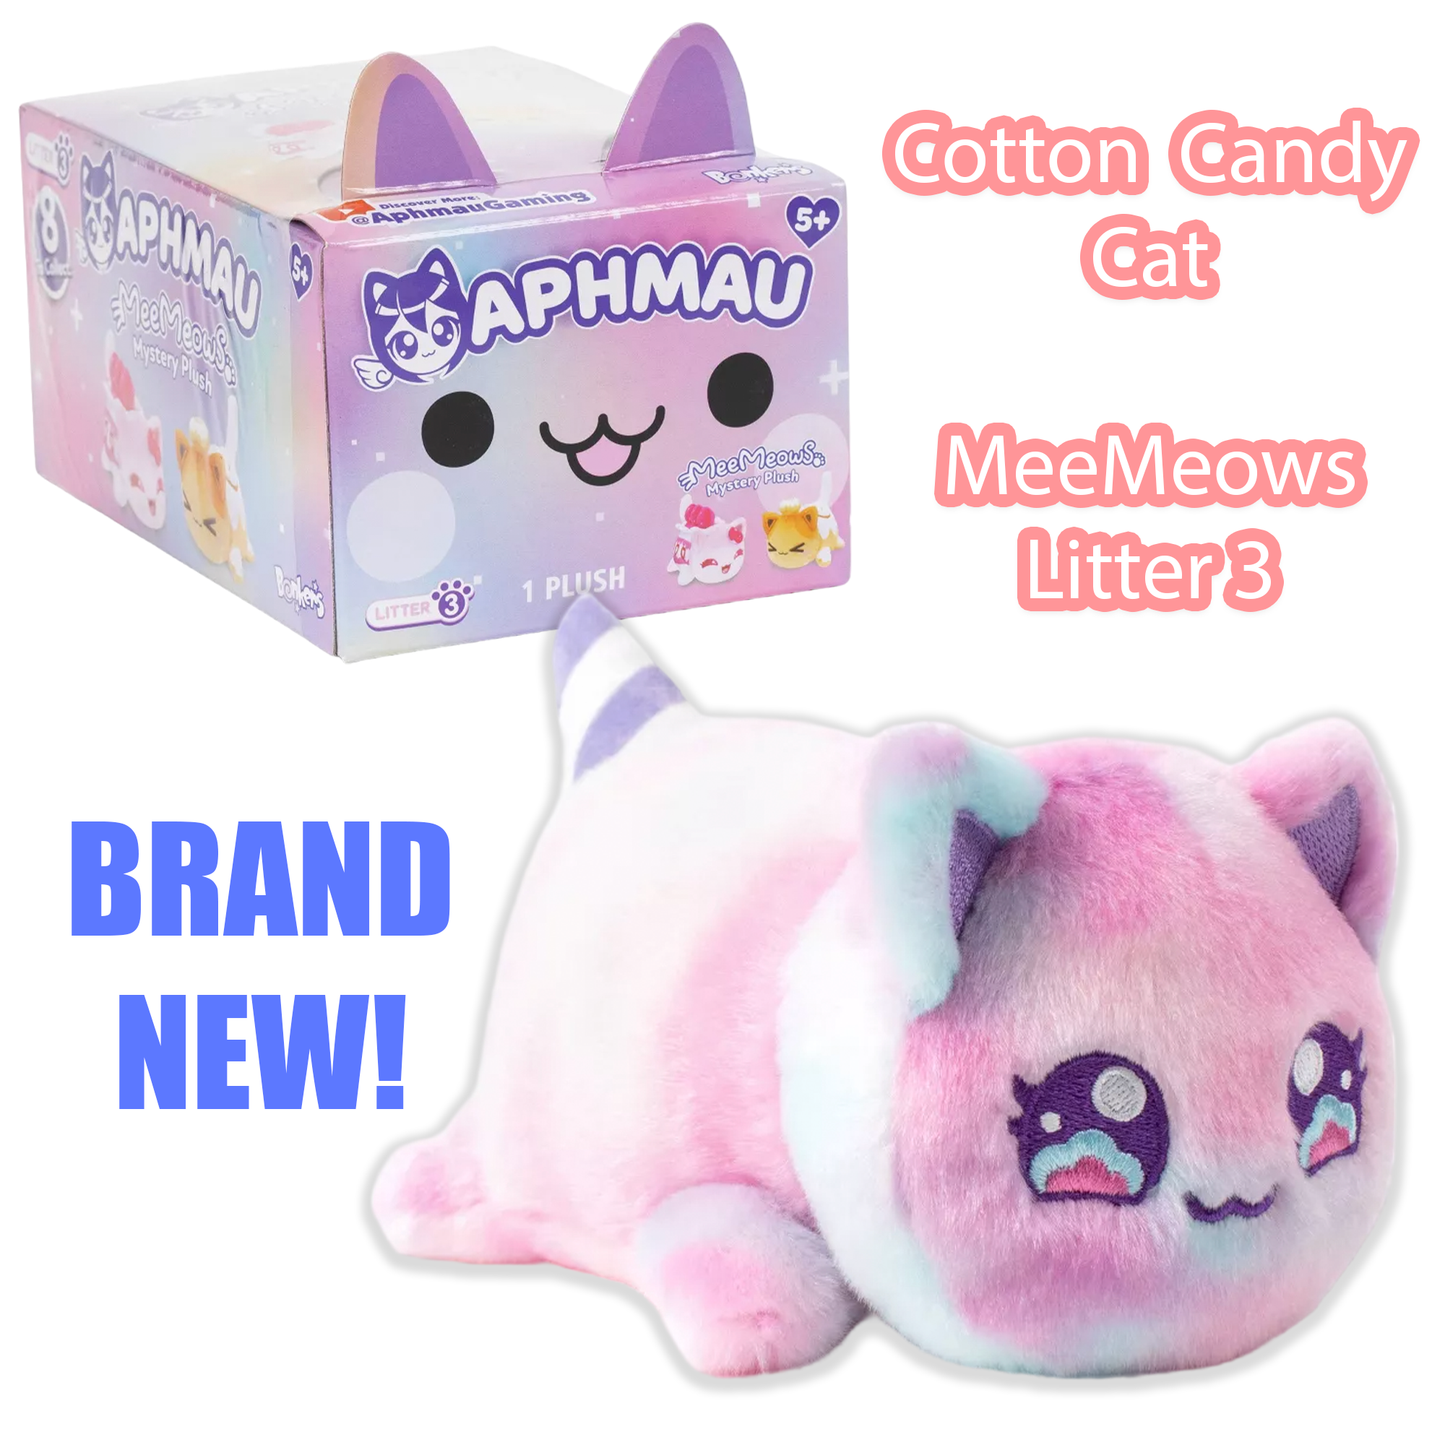 MOON CAT - MeeMeows Litter 4 from Aphmau (BRAND NEW) Cute Kitty Plushi –  Otaku Boxes